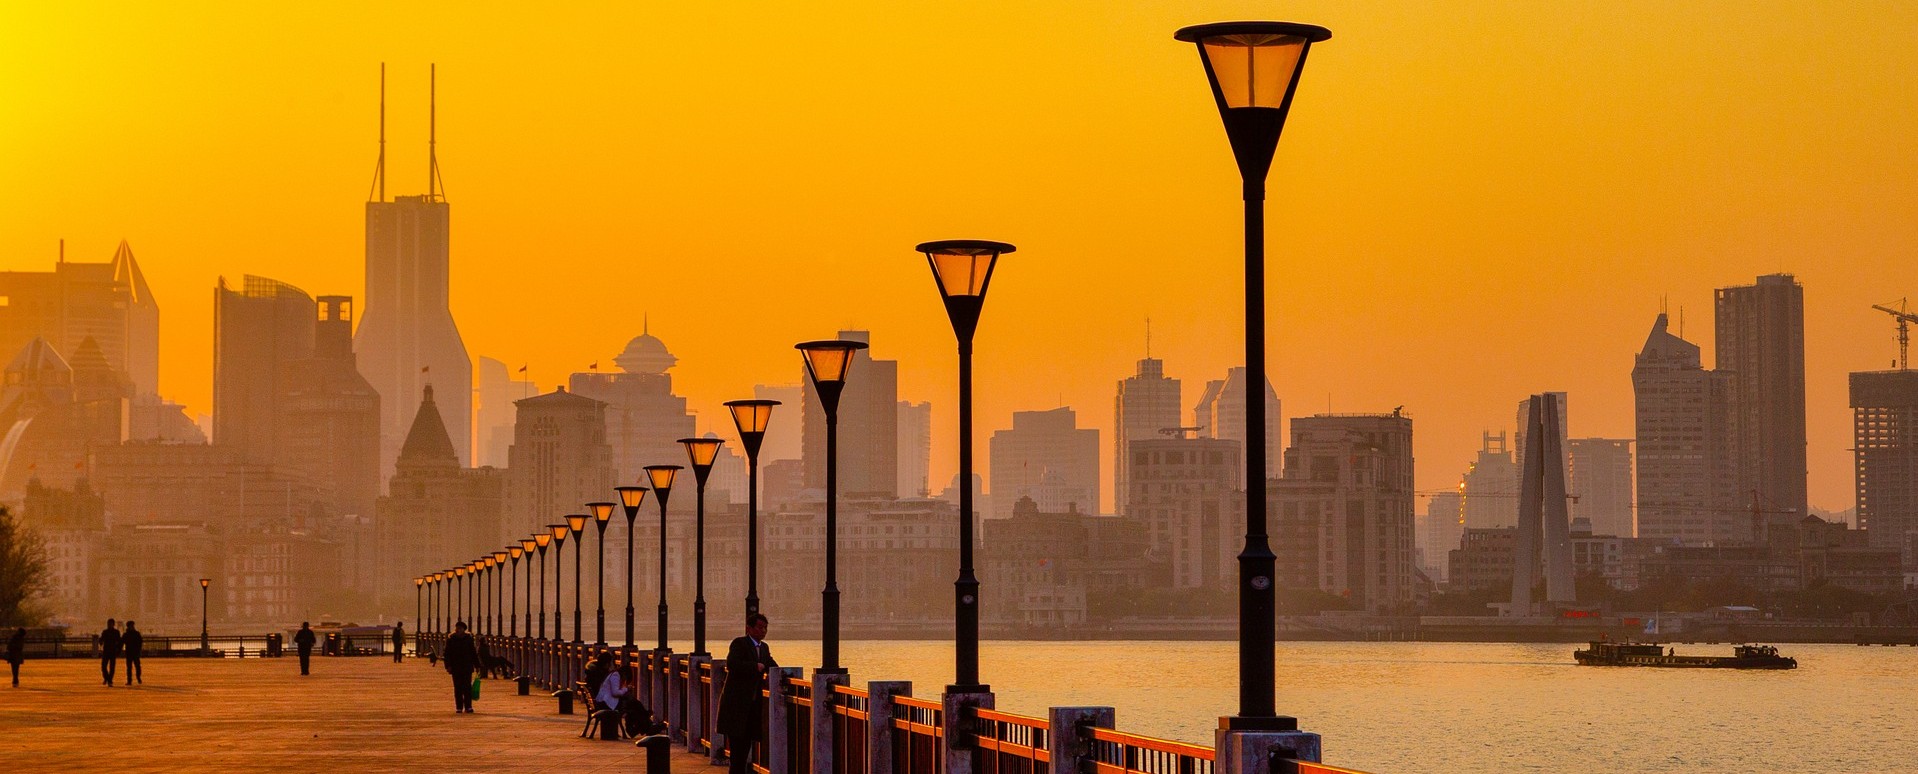 Home Screen Image -Shanghai Sunset Polution over Bund Med Res